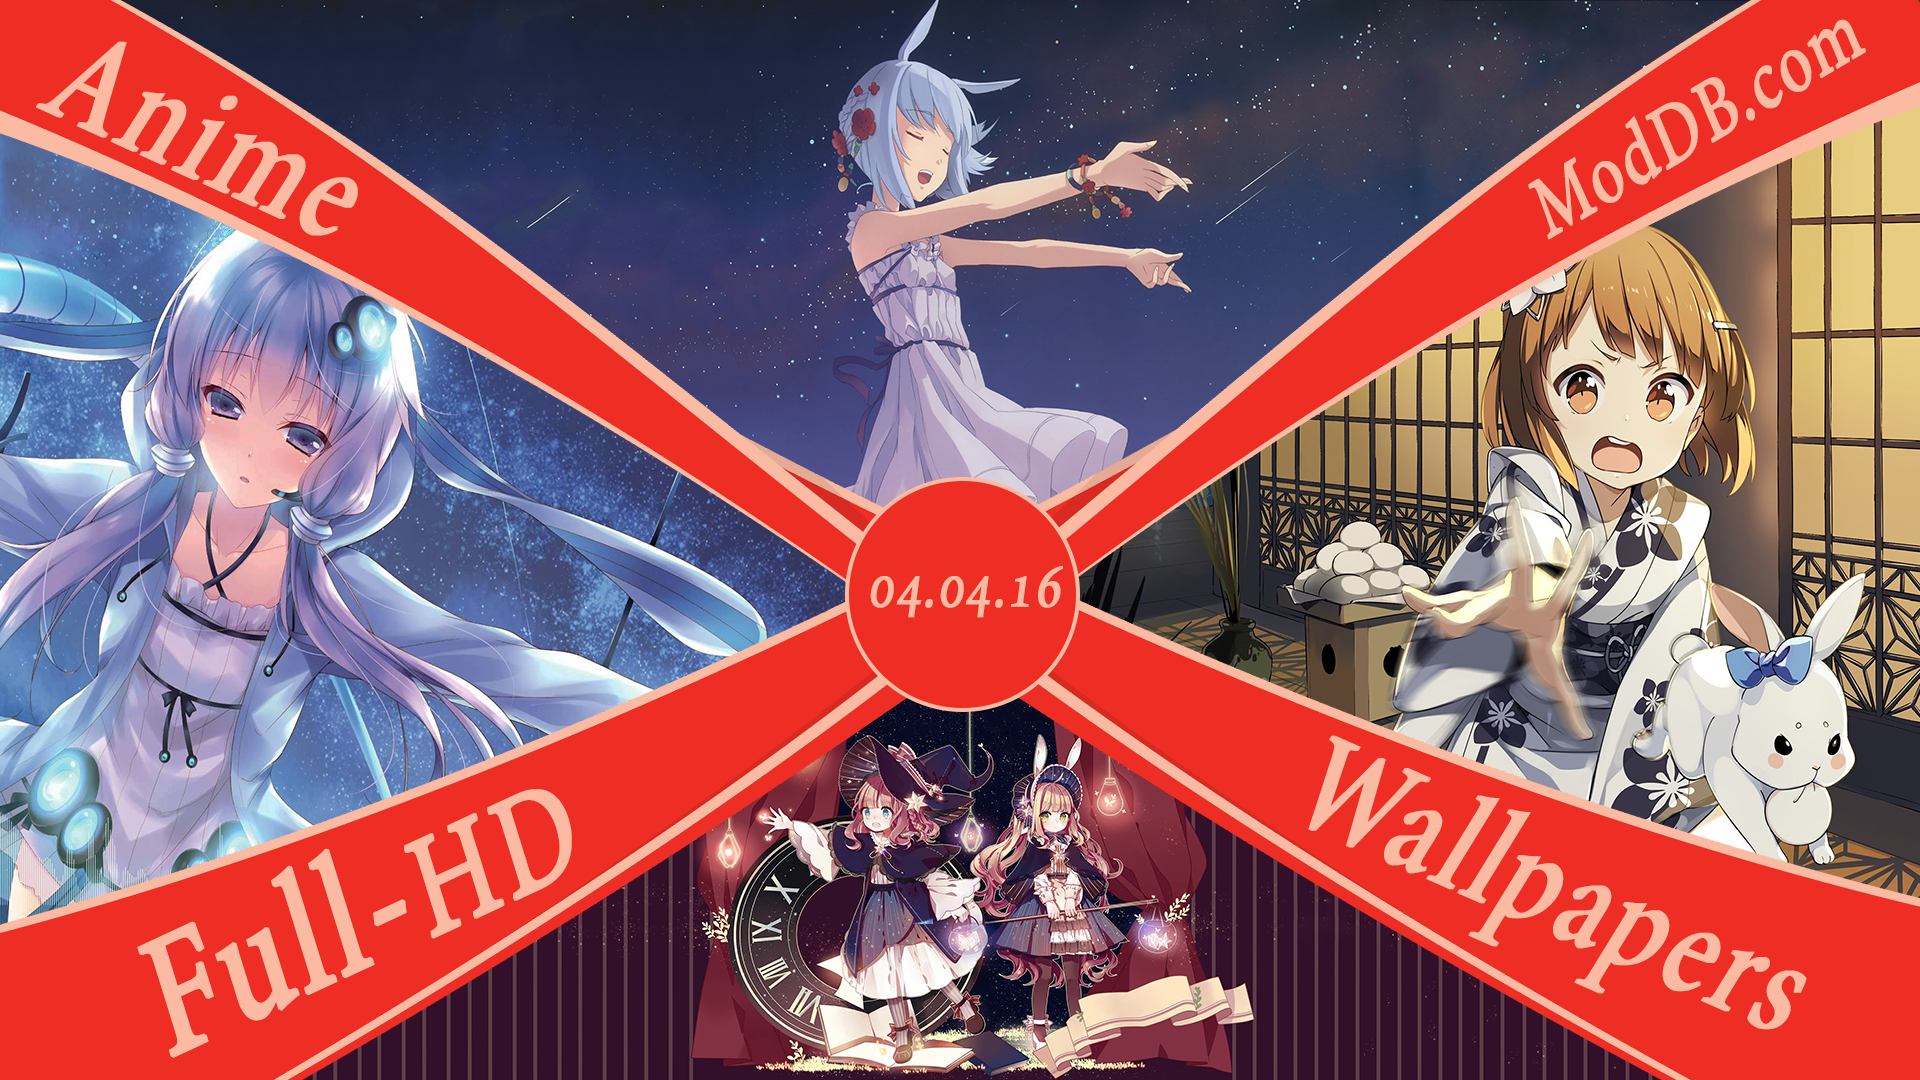 Old Anime Wallpaper's (Full-HD) - 04.04.15 file - ModDB